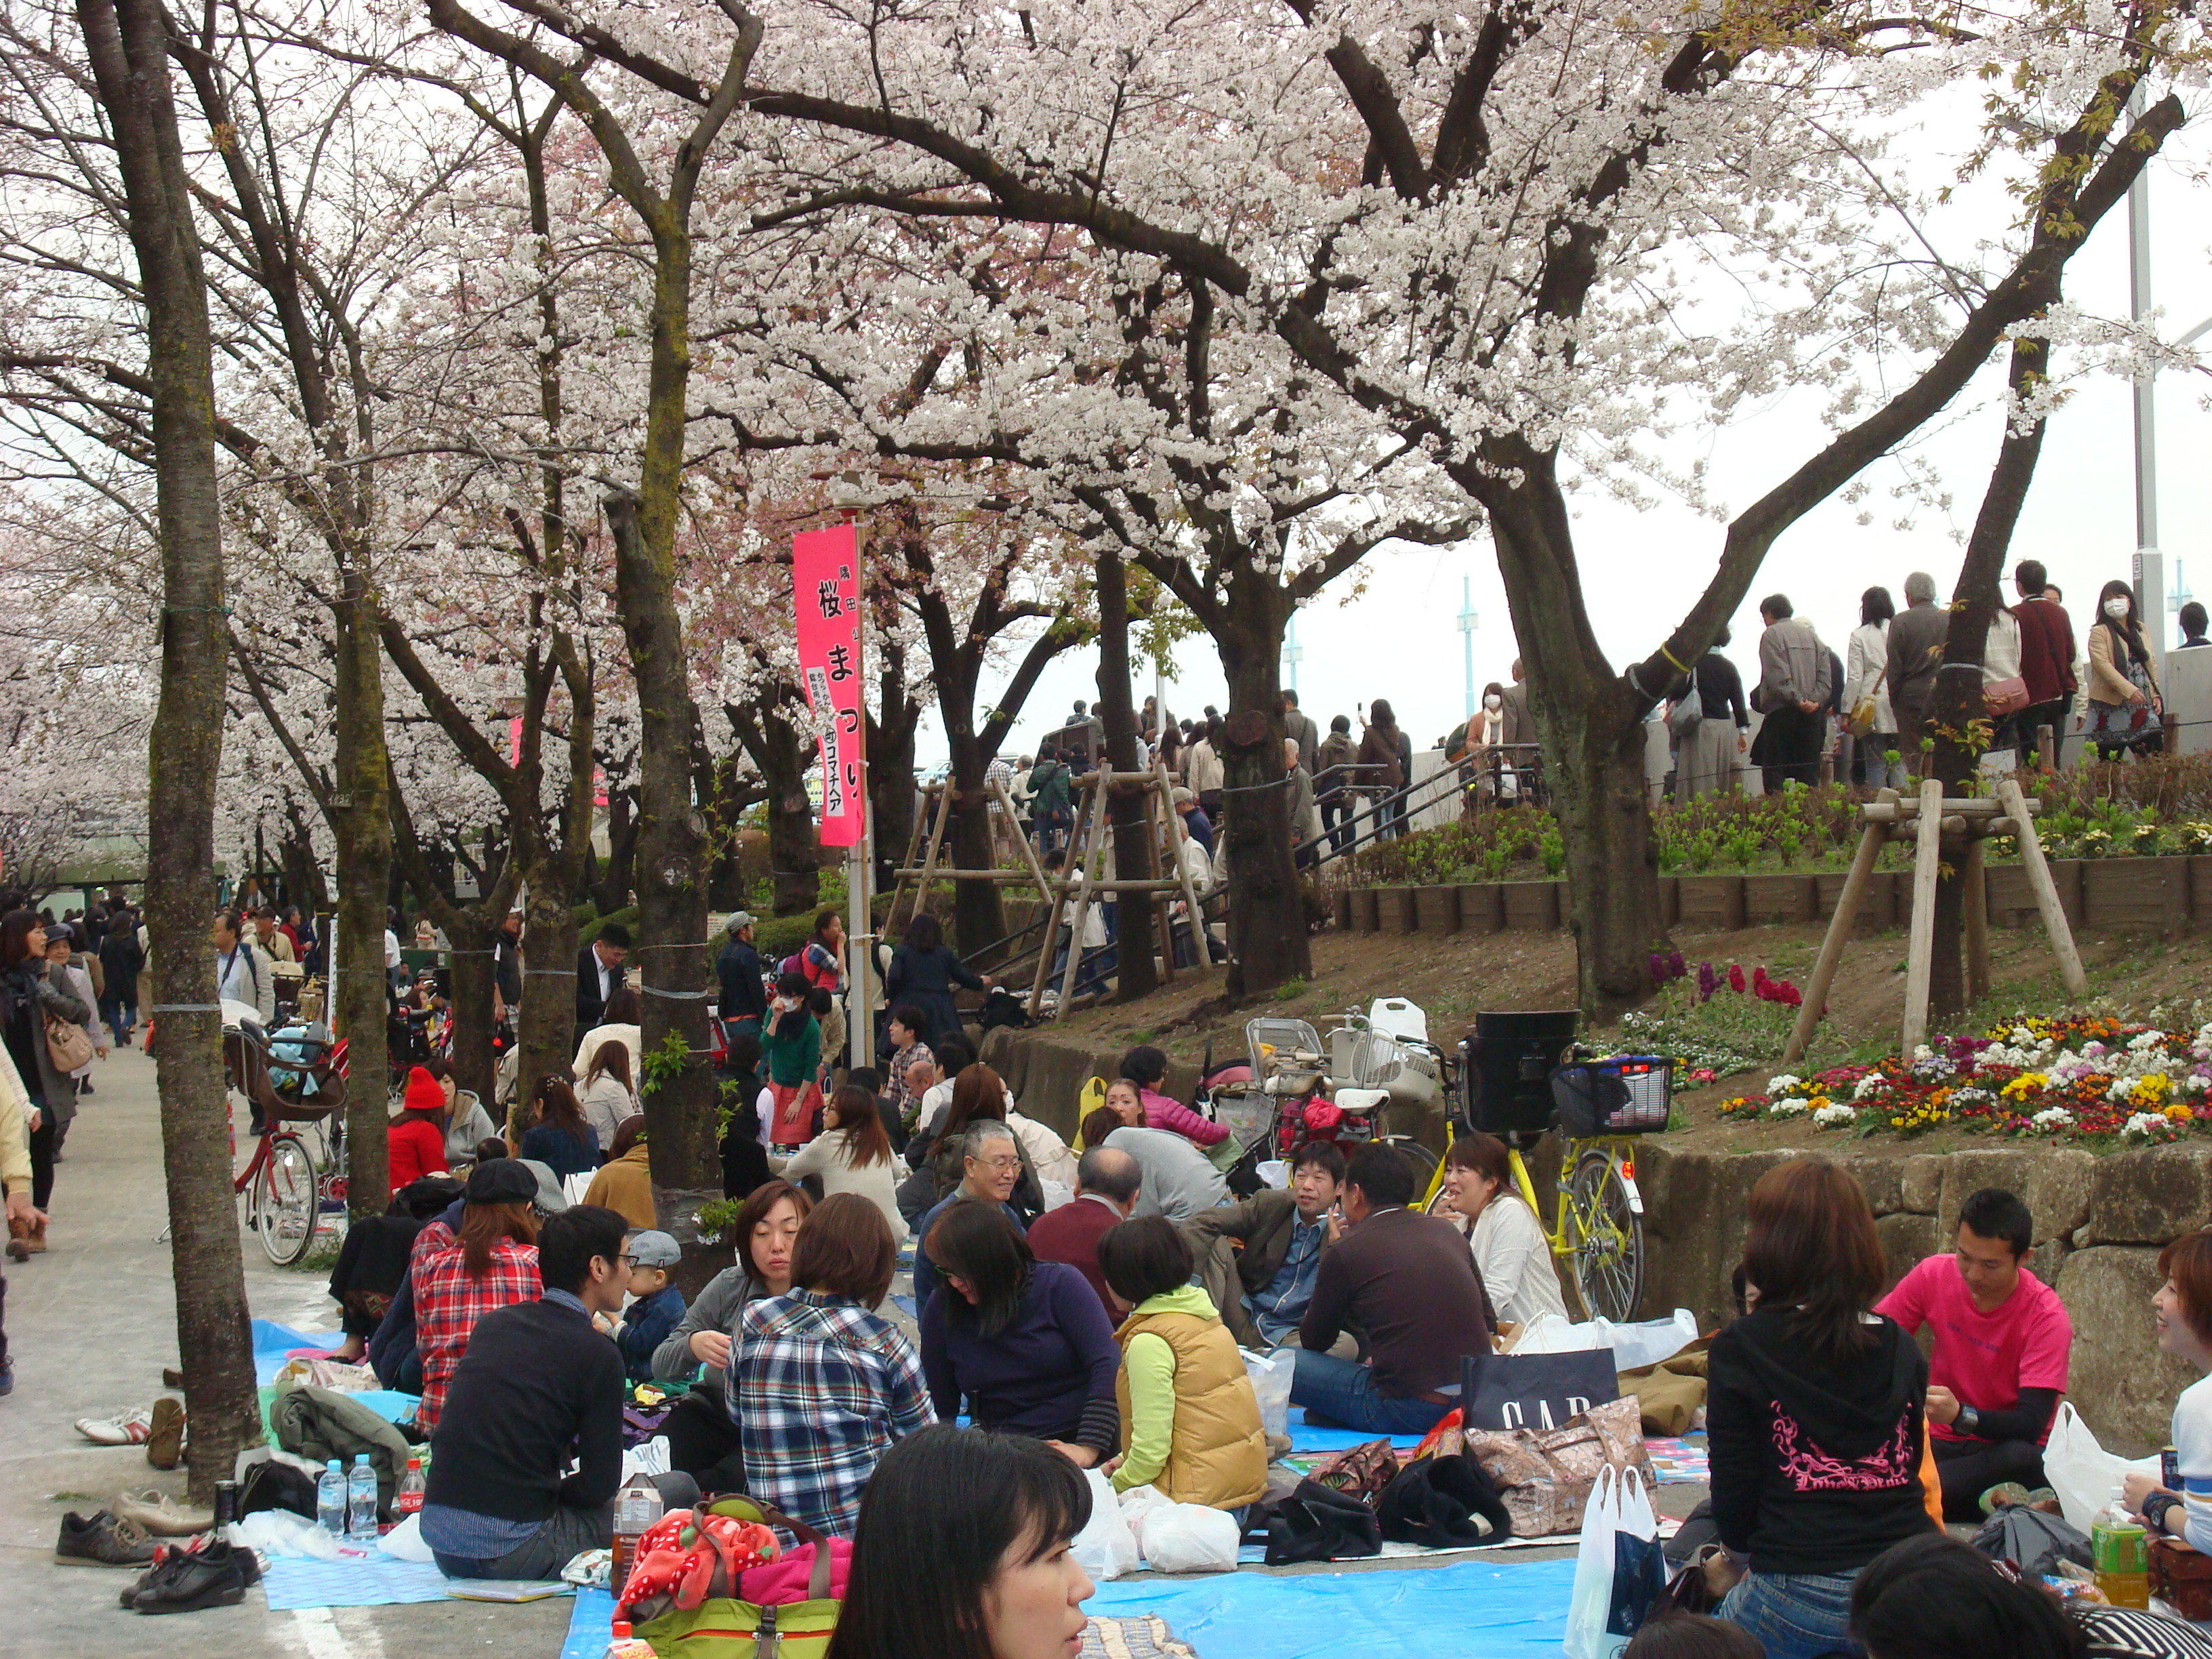 Cherry blossom viewing at Mukojima in Tokyo